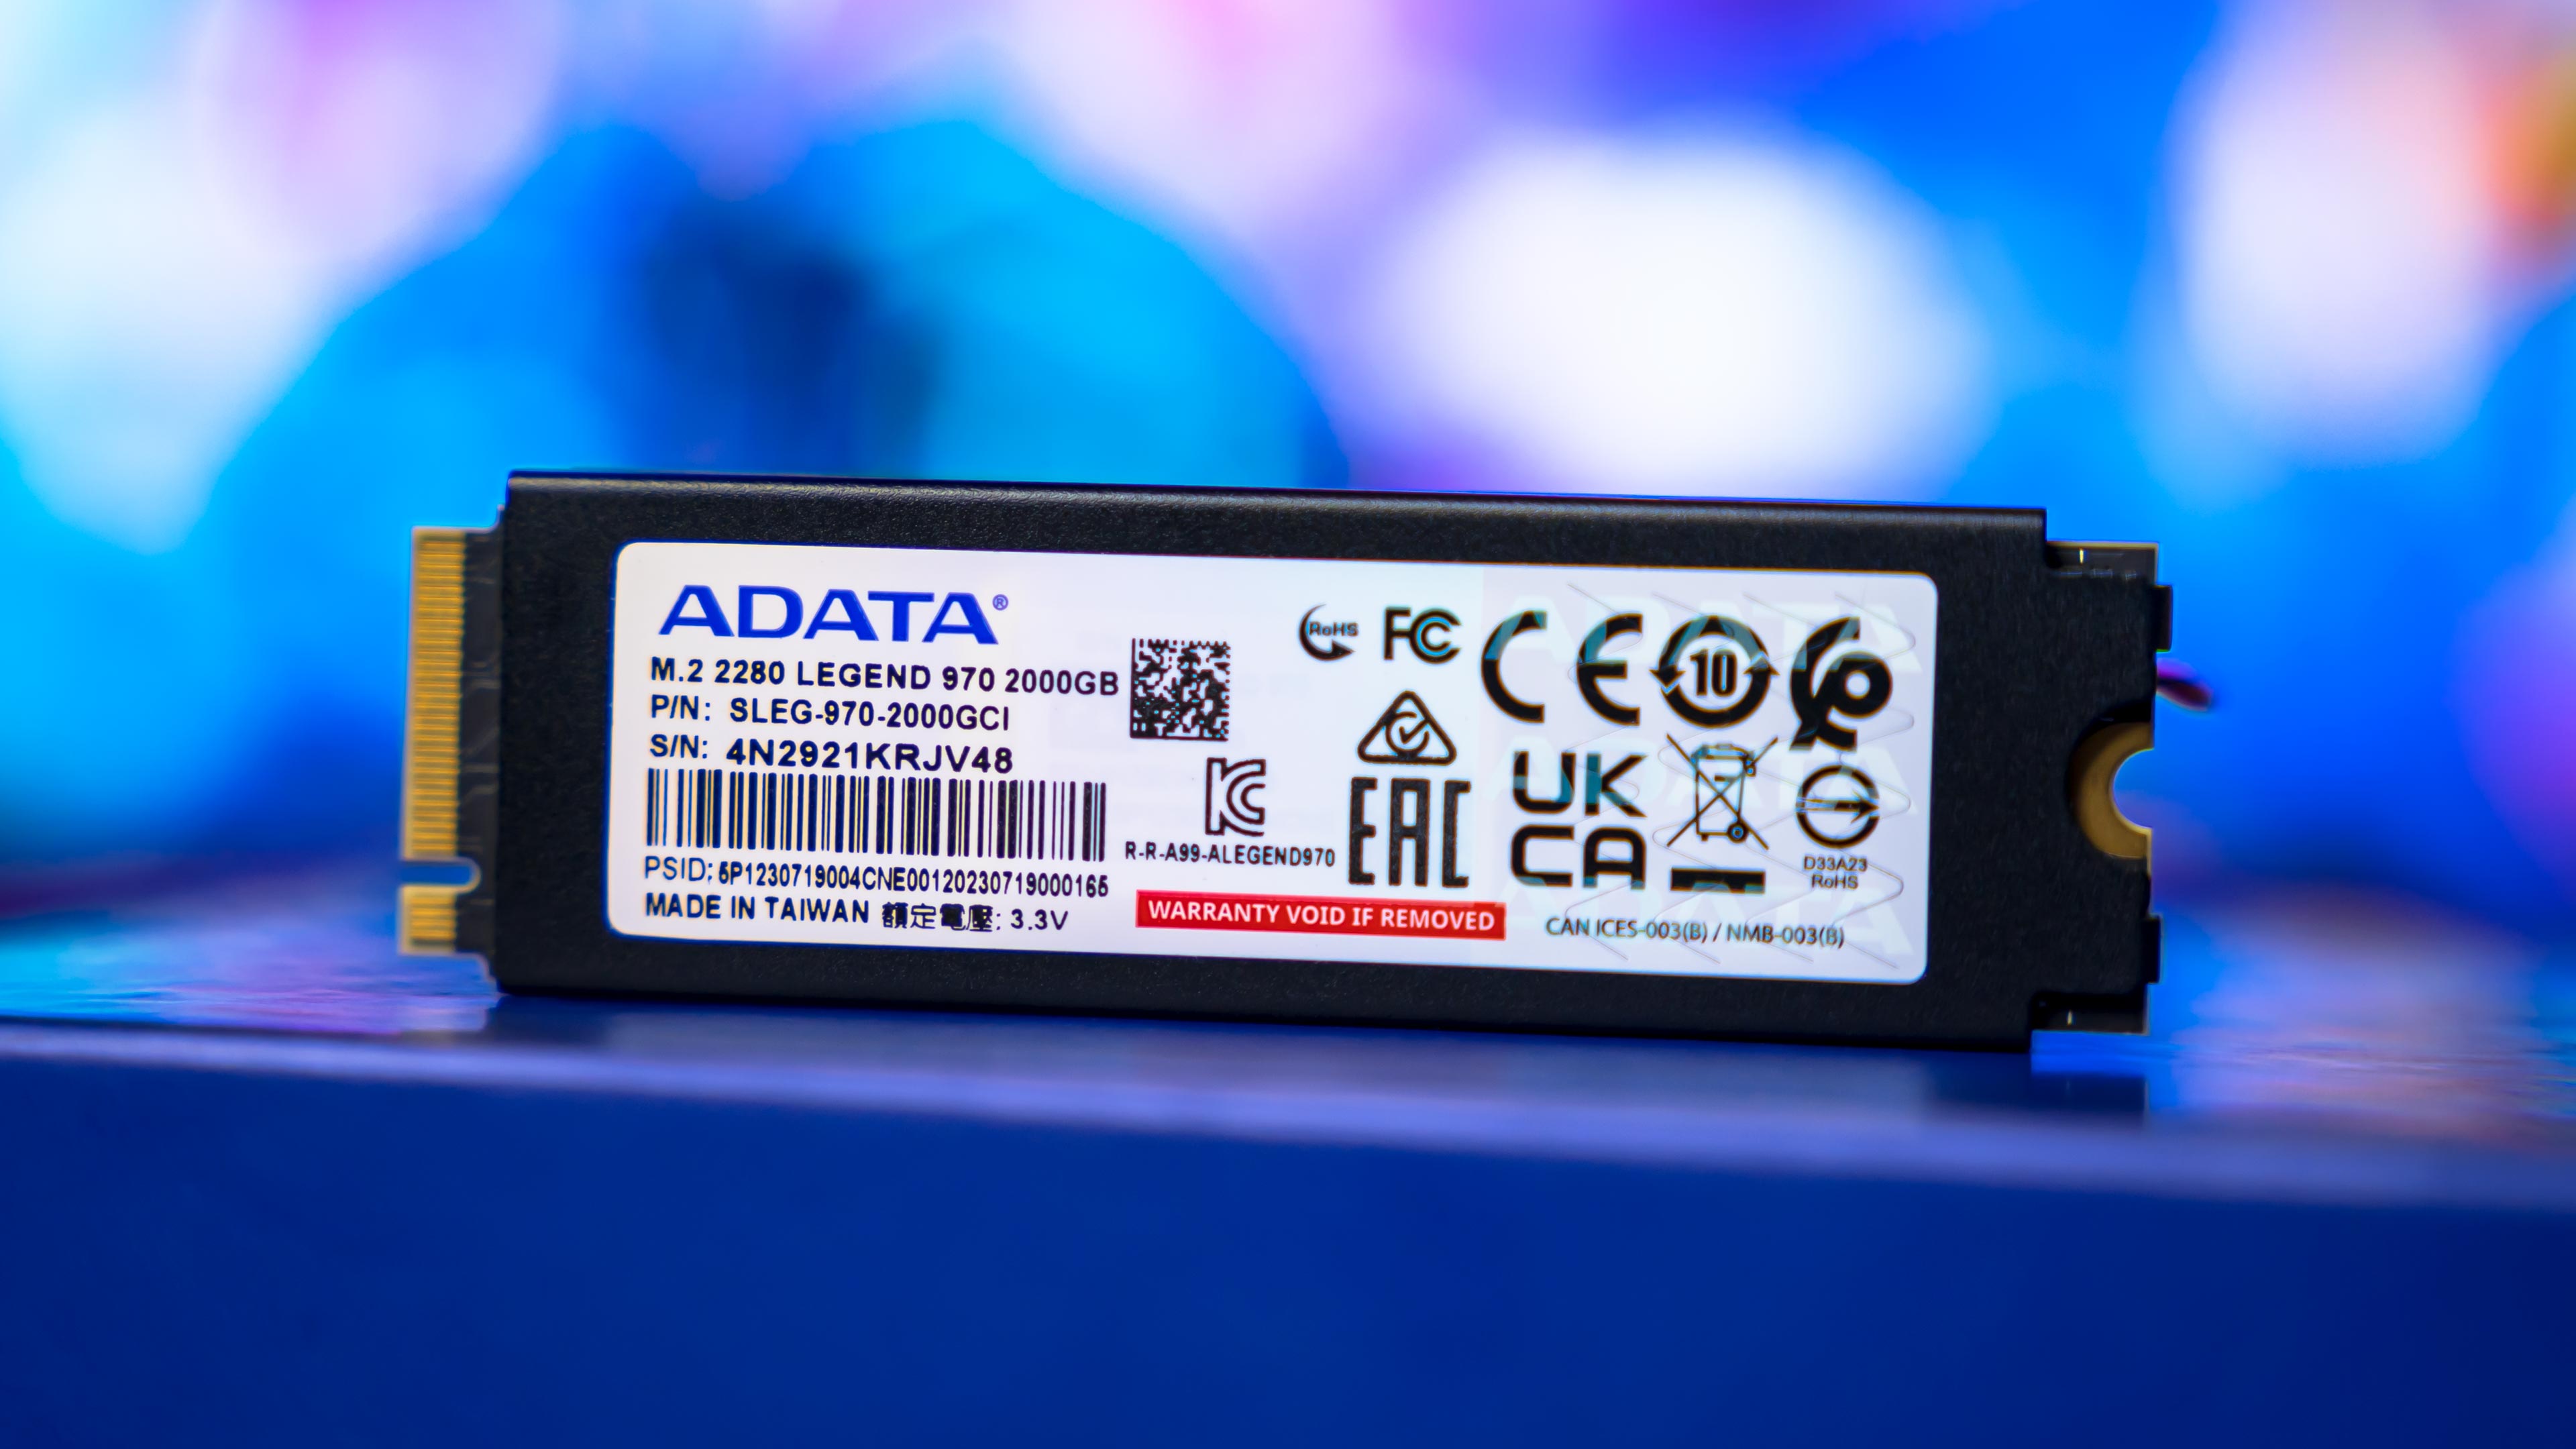 ADATA Legend 970 SSD (6)